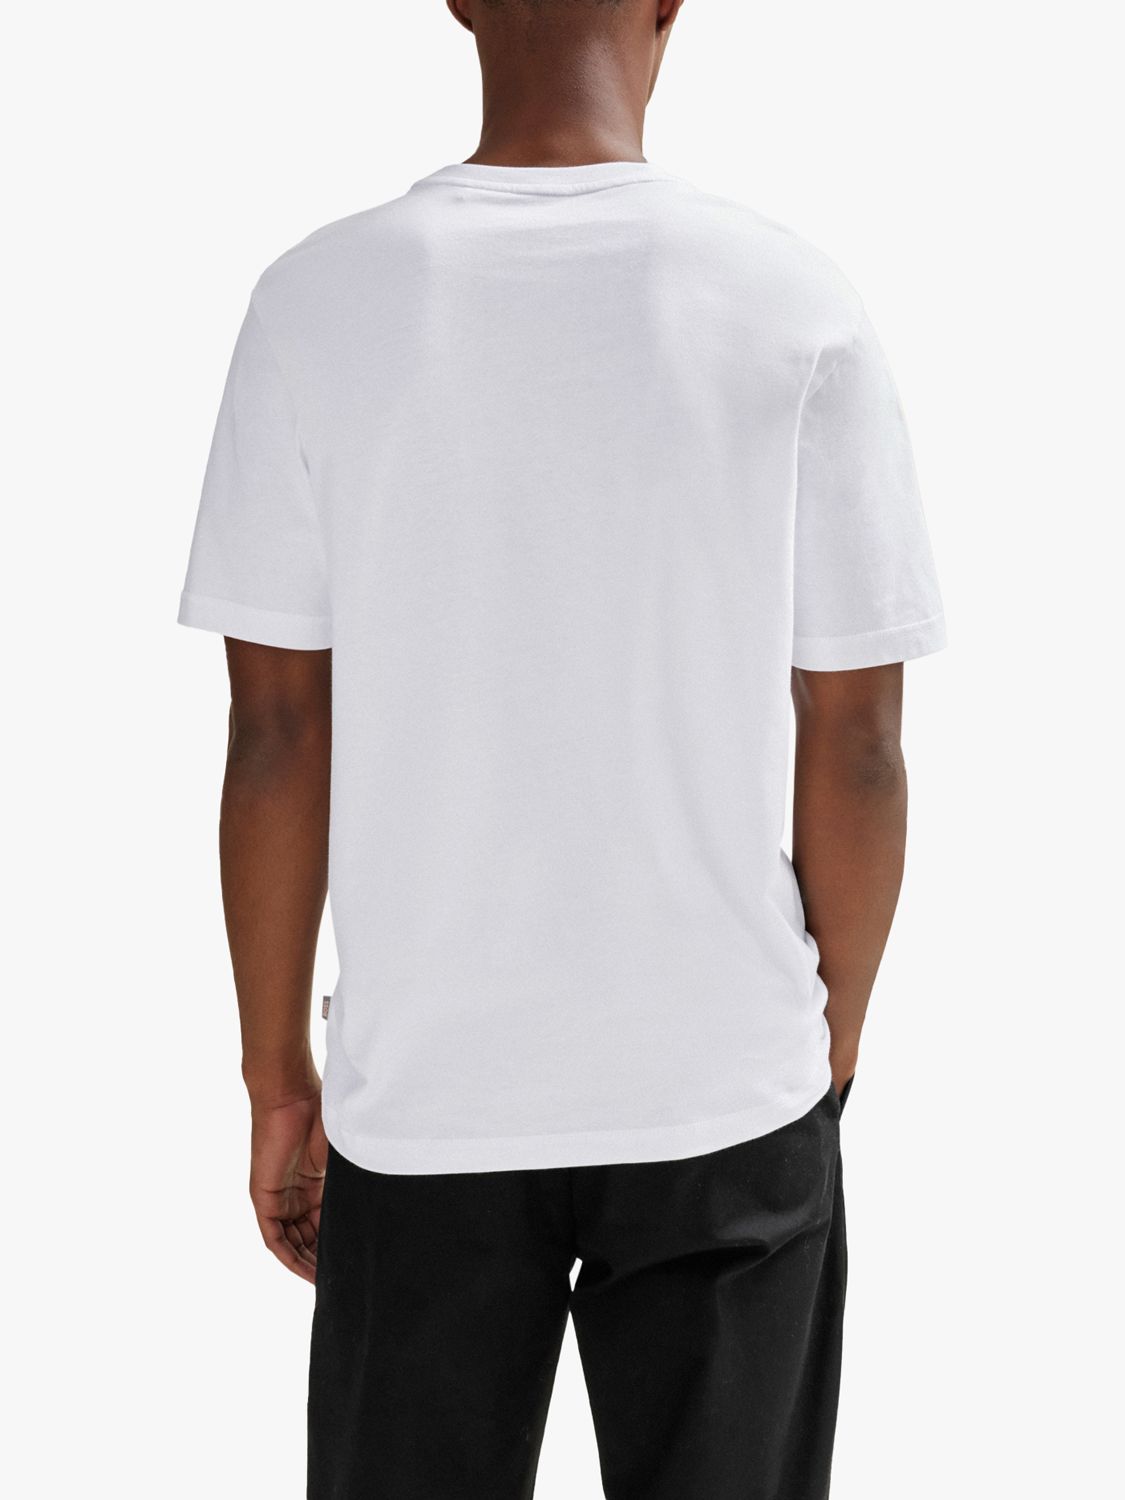 BOSS TeScorpion 101 Natural T-Shirt, White/Black, XXXL